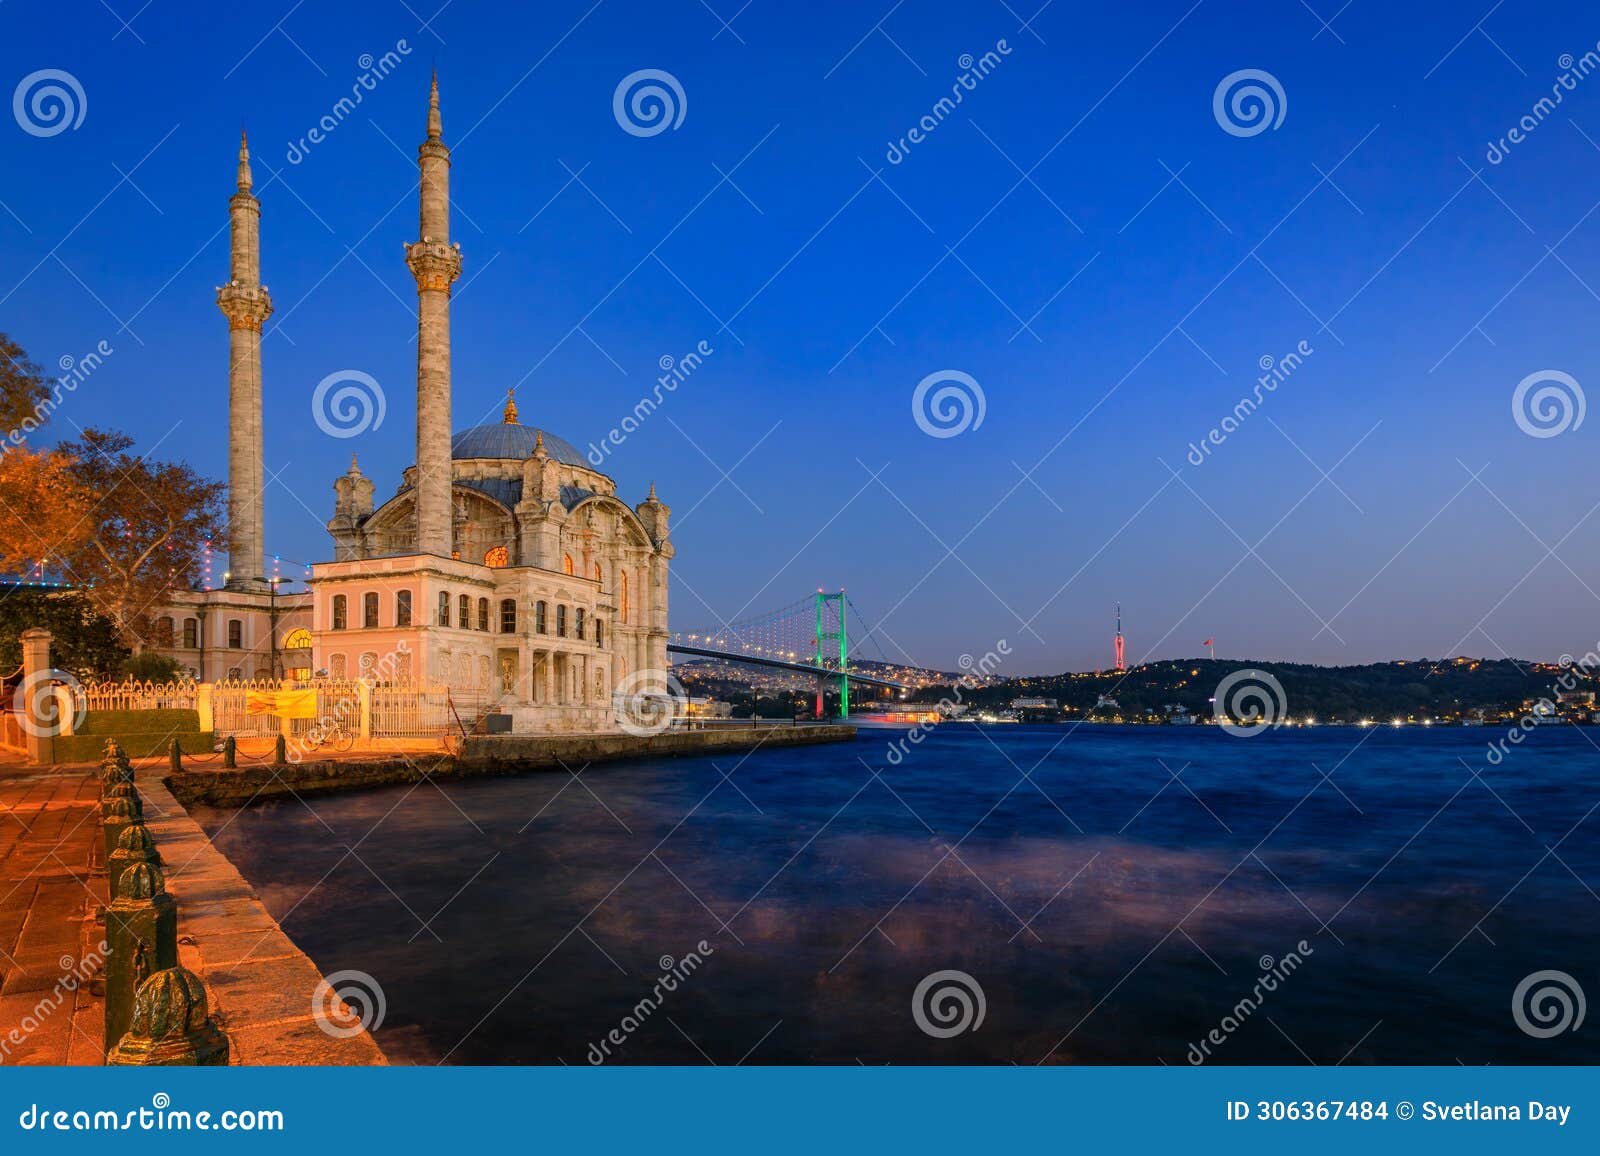 sunset over bosphorus and grand mecidiye mosque ortakoy mosque,